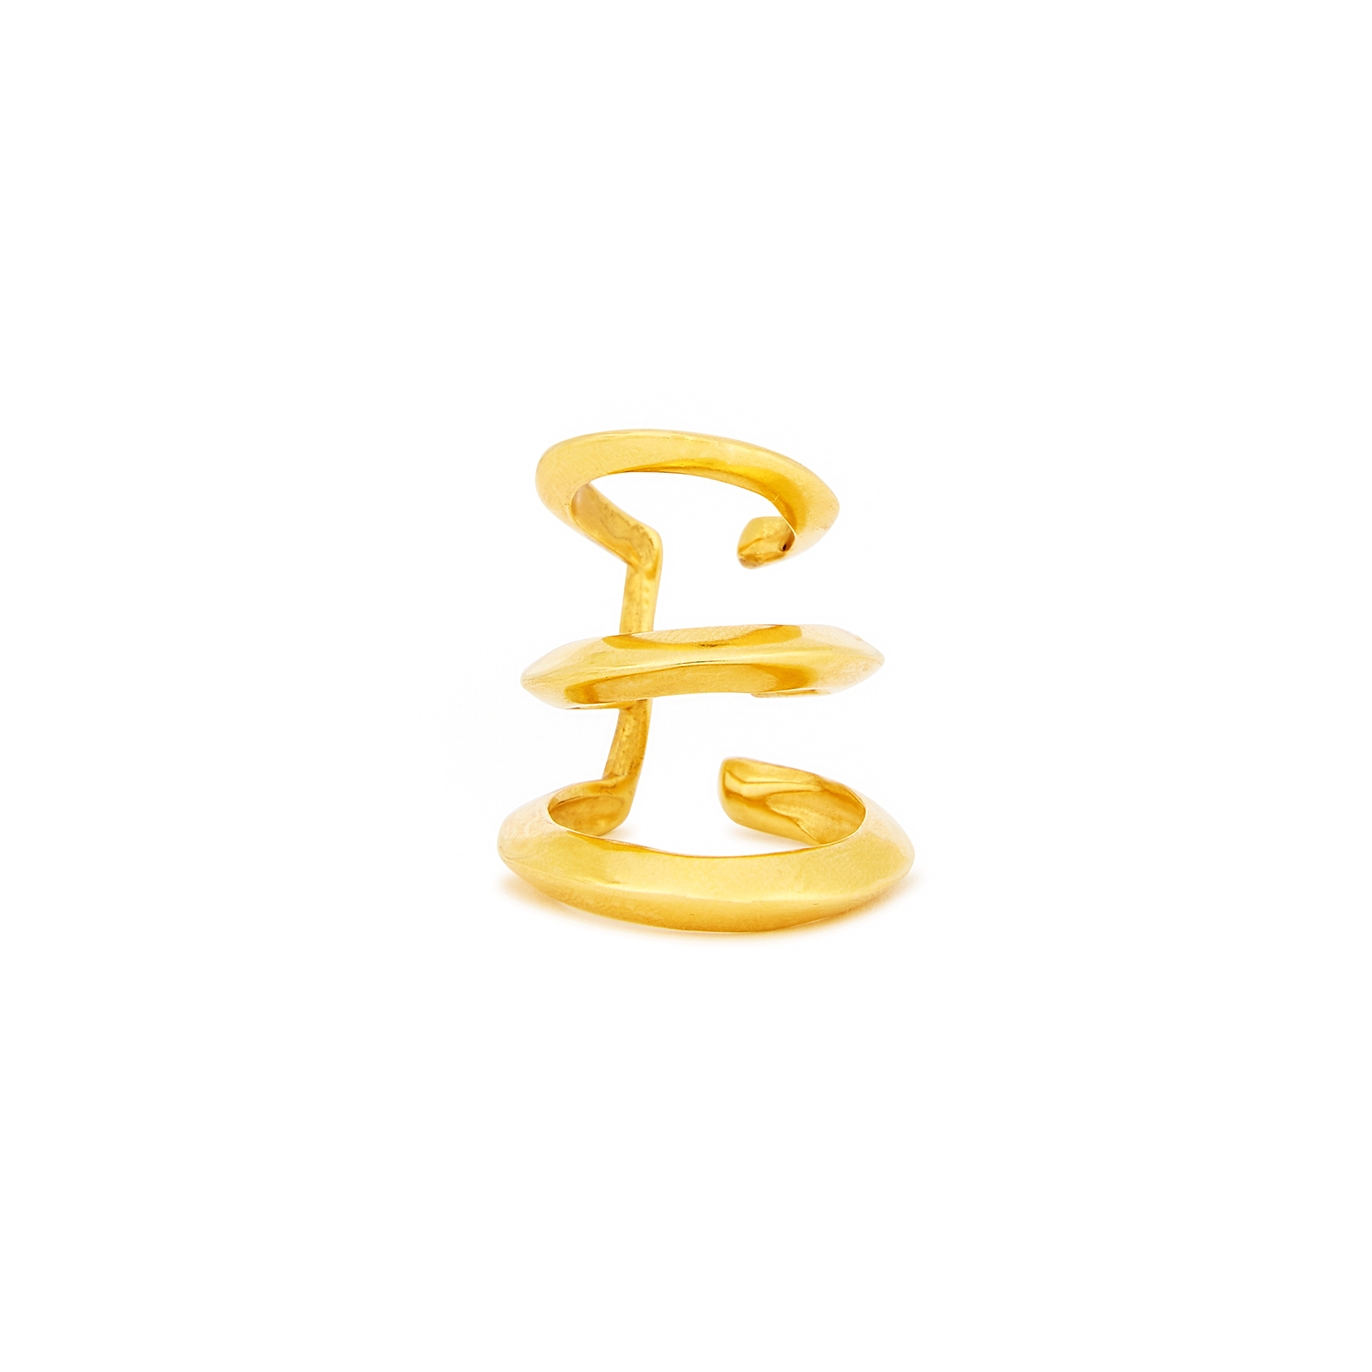 Goossens Spirale 24kt Gold-dipped Ear Cuff - One Size